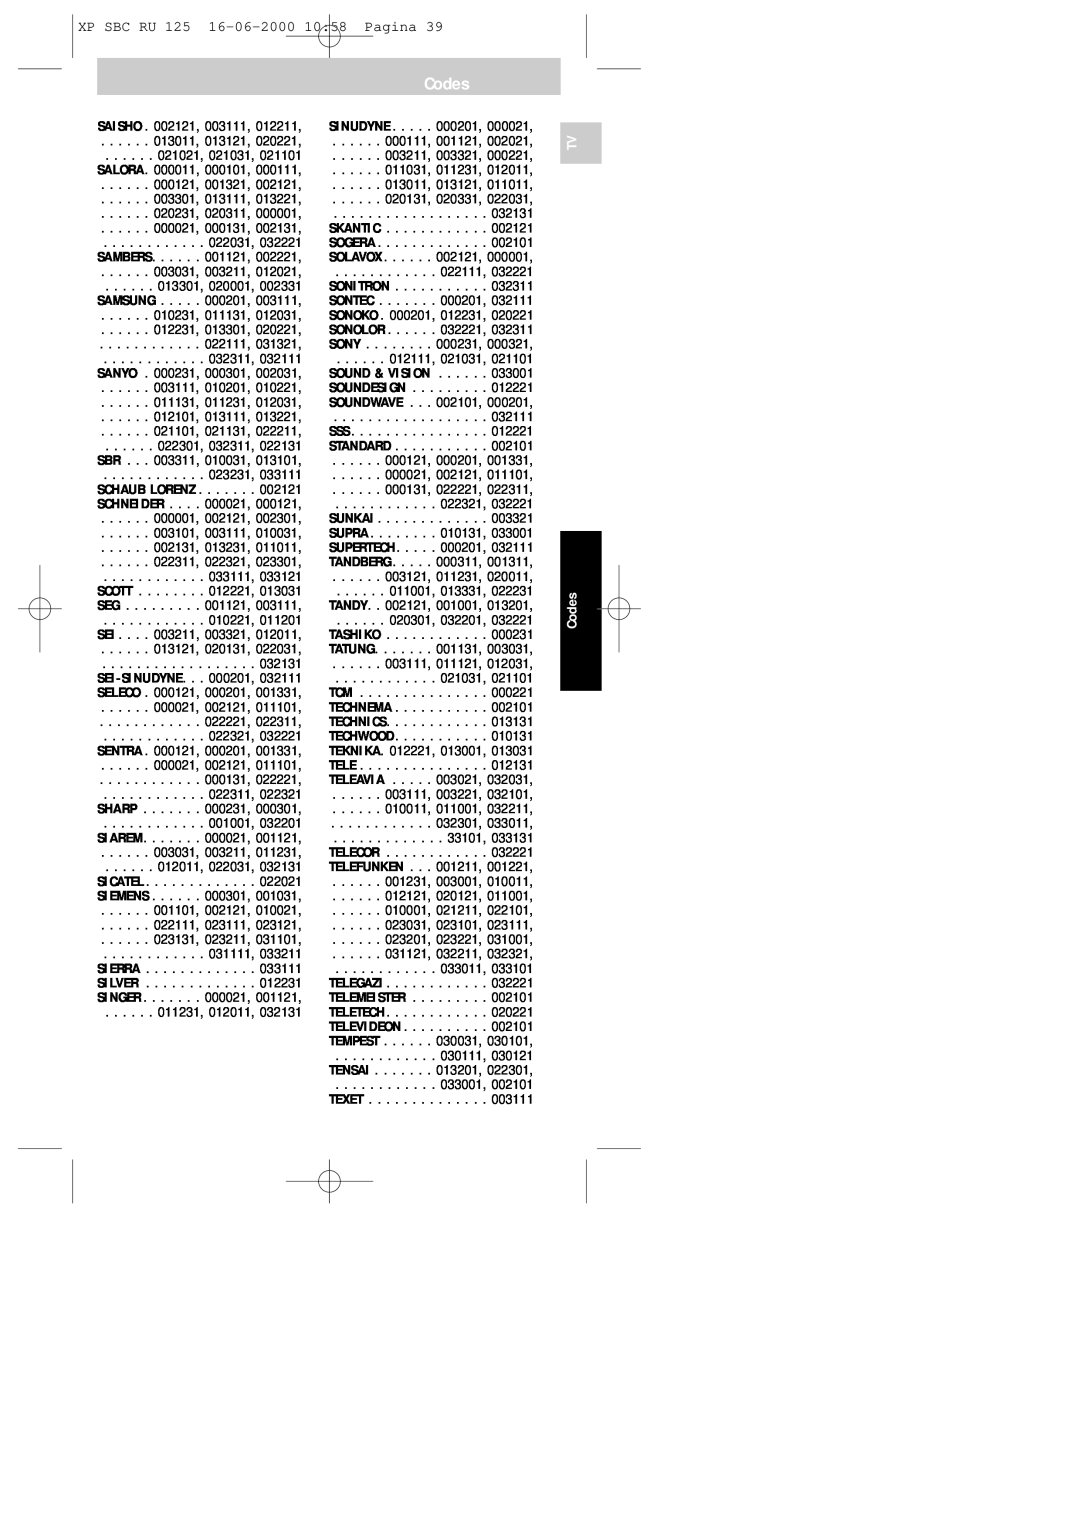 Philips RU125 manual 013011, TV Codes 